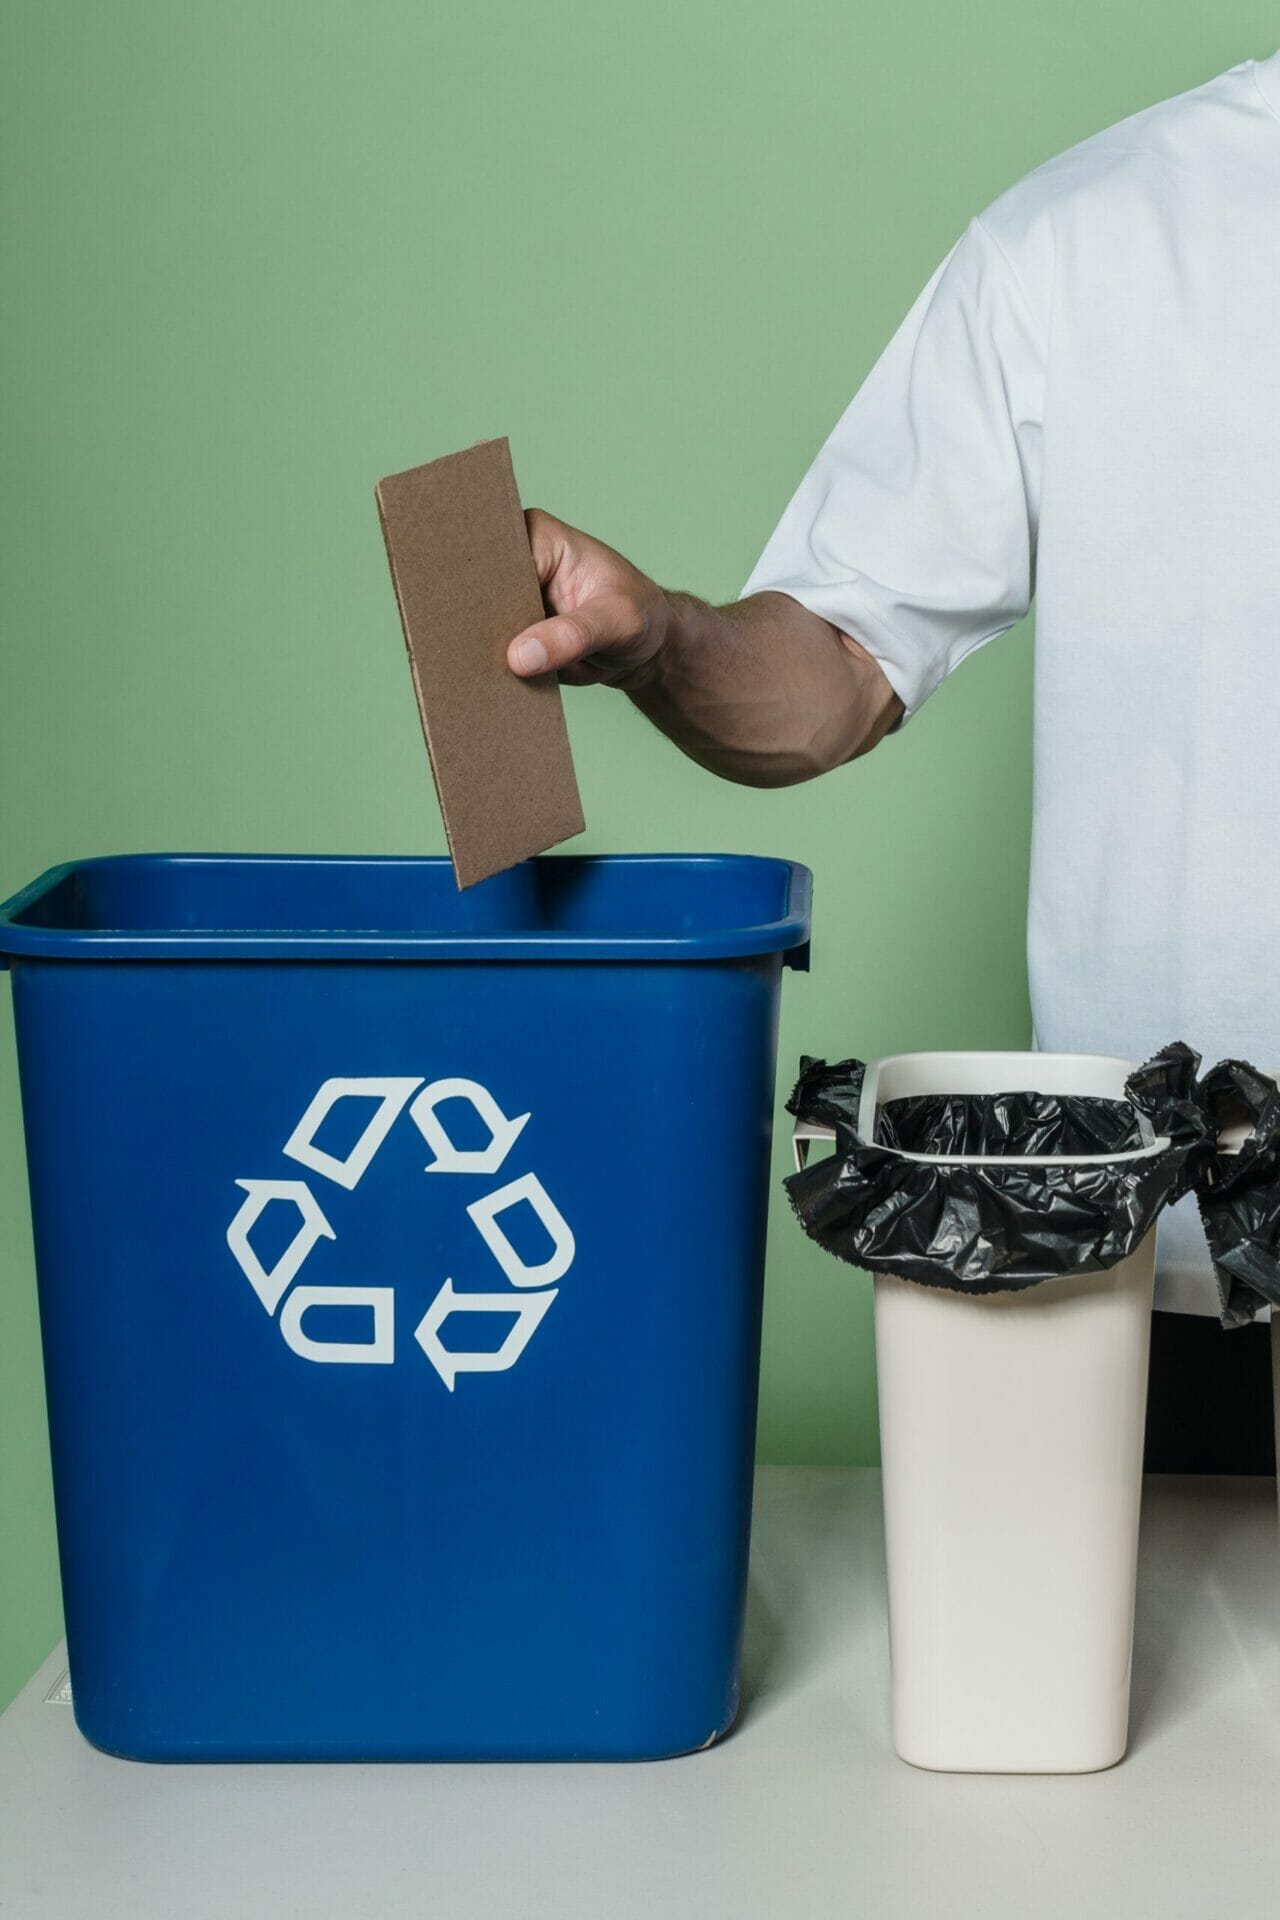 Man placing cardboard into blue plastic recycling bin